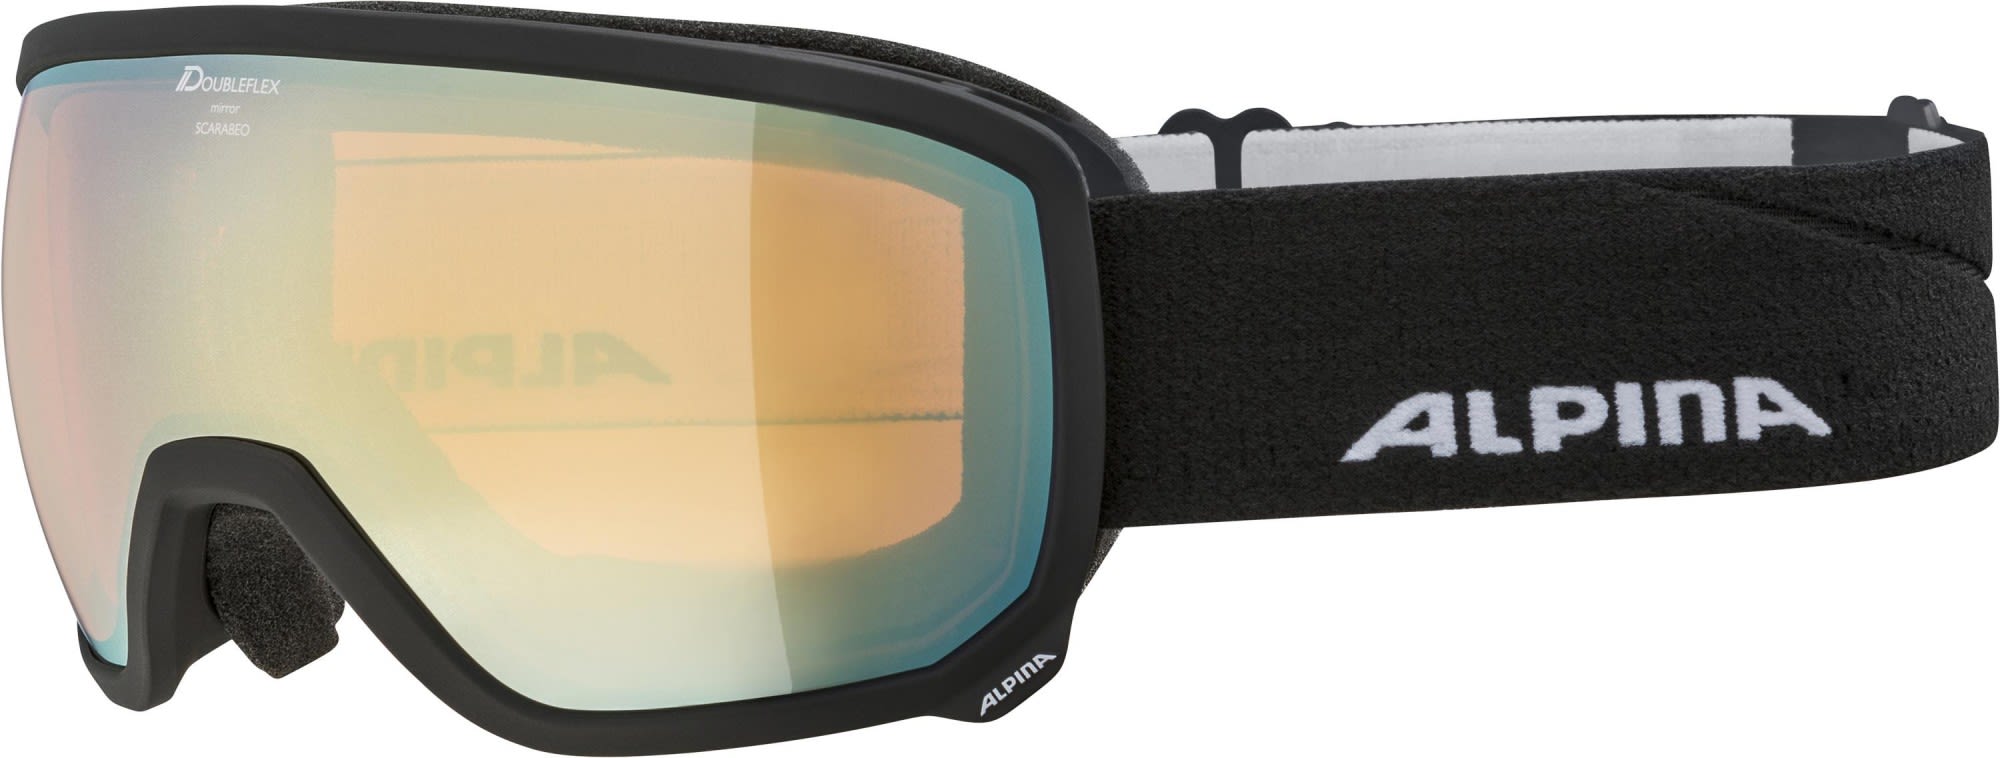 Alpina Komfortable kontrastverstärkende Skibrille Black Matt - Mirror Gold